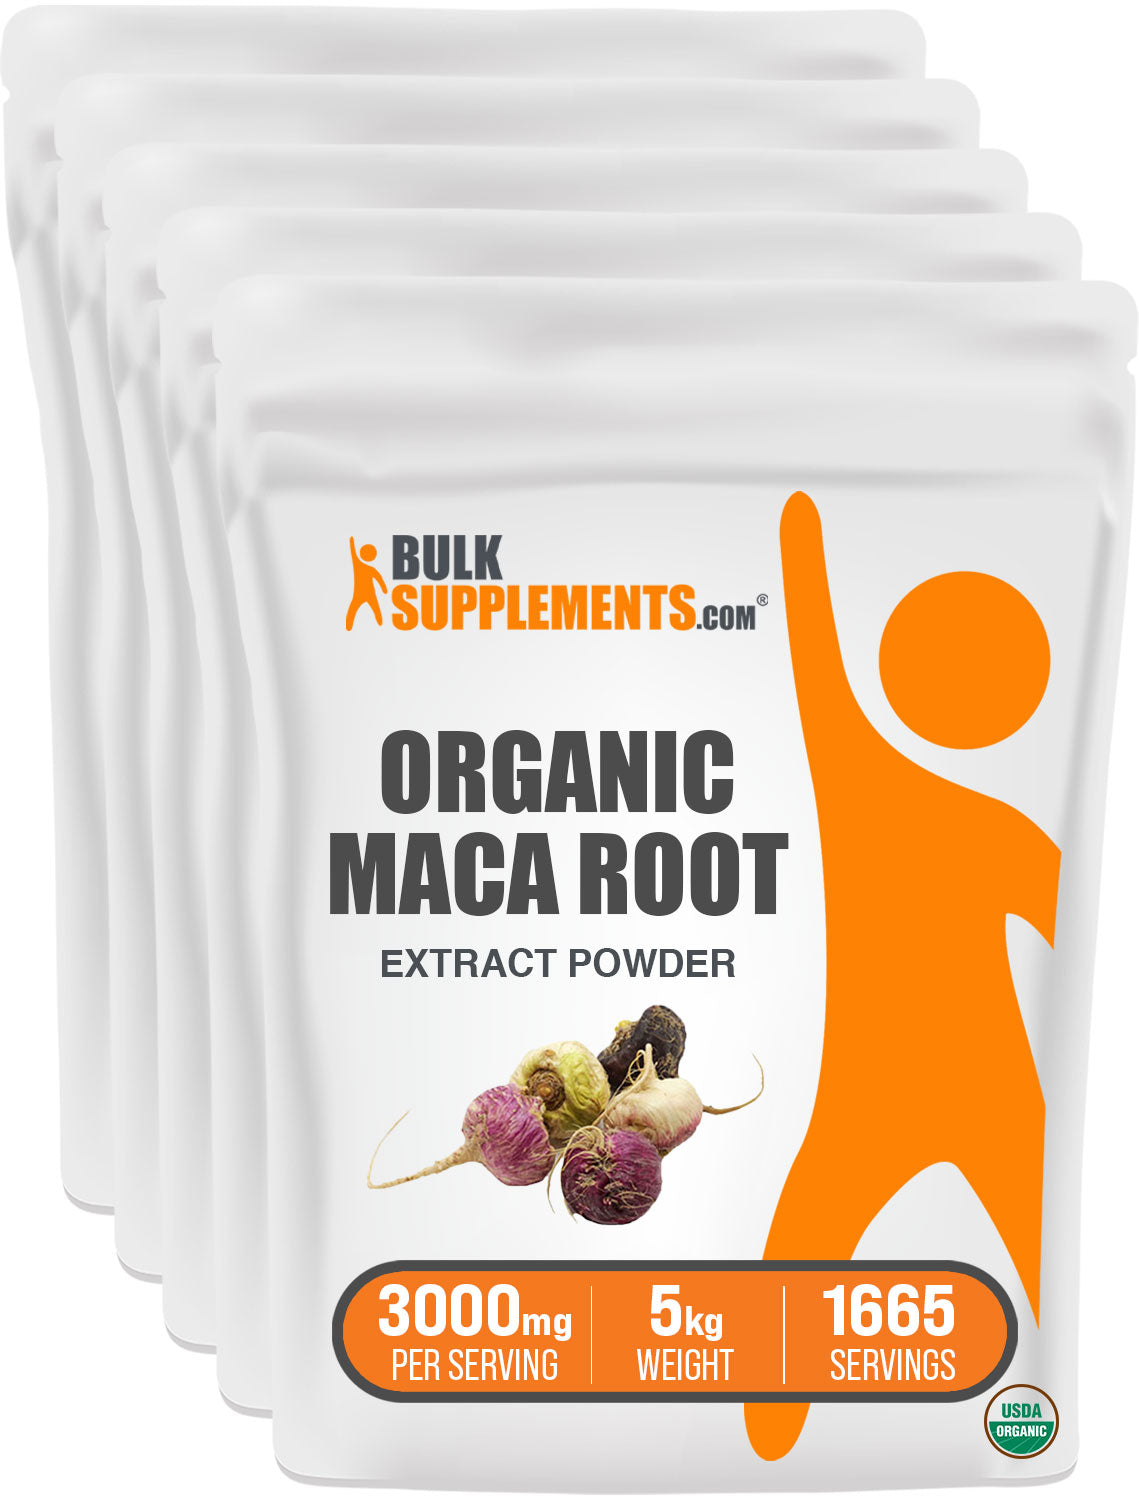 BulkSupplements Organic Maca Root Extract Powder 5kg bags